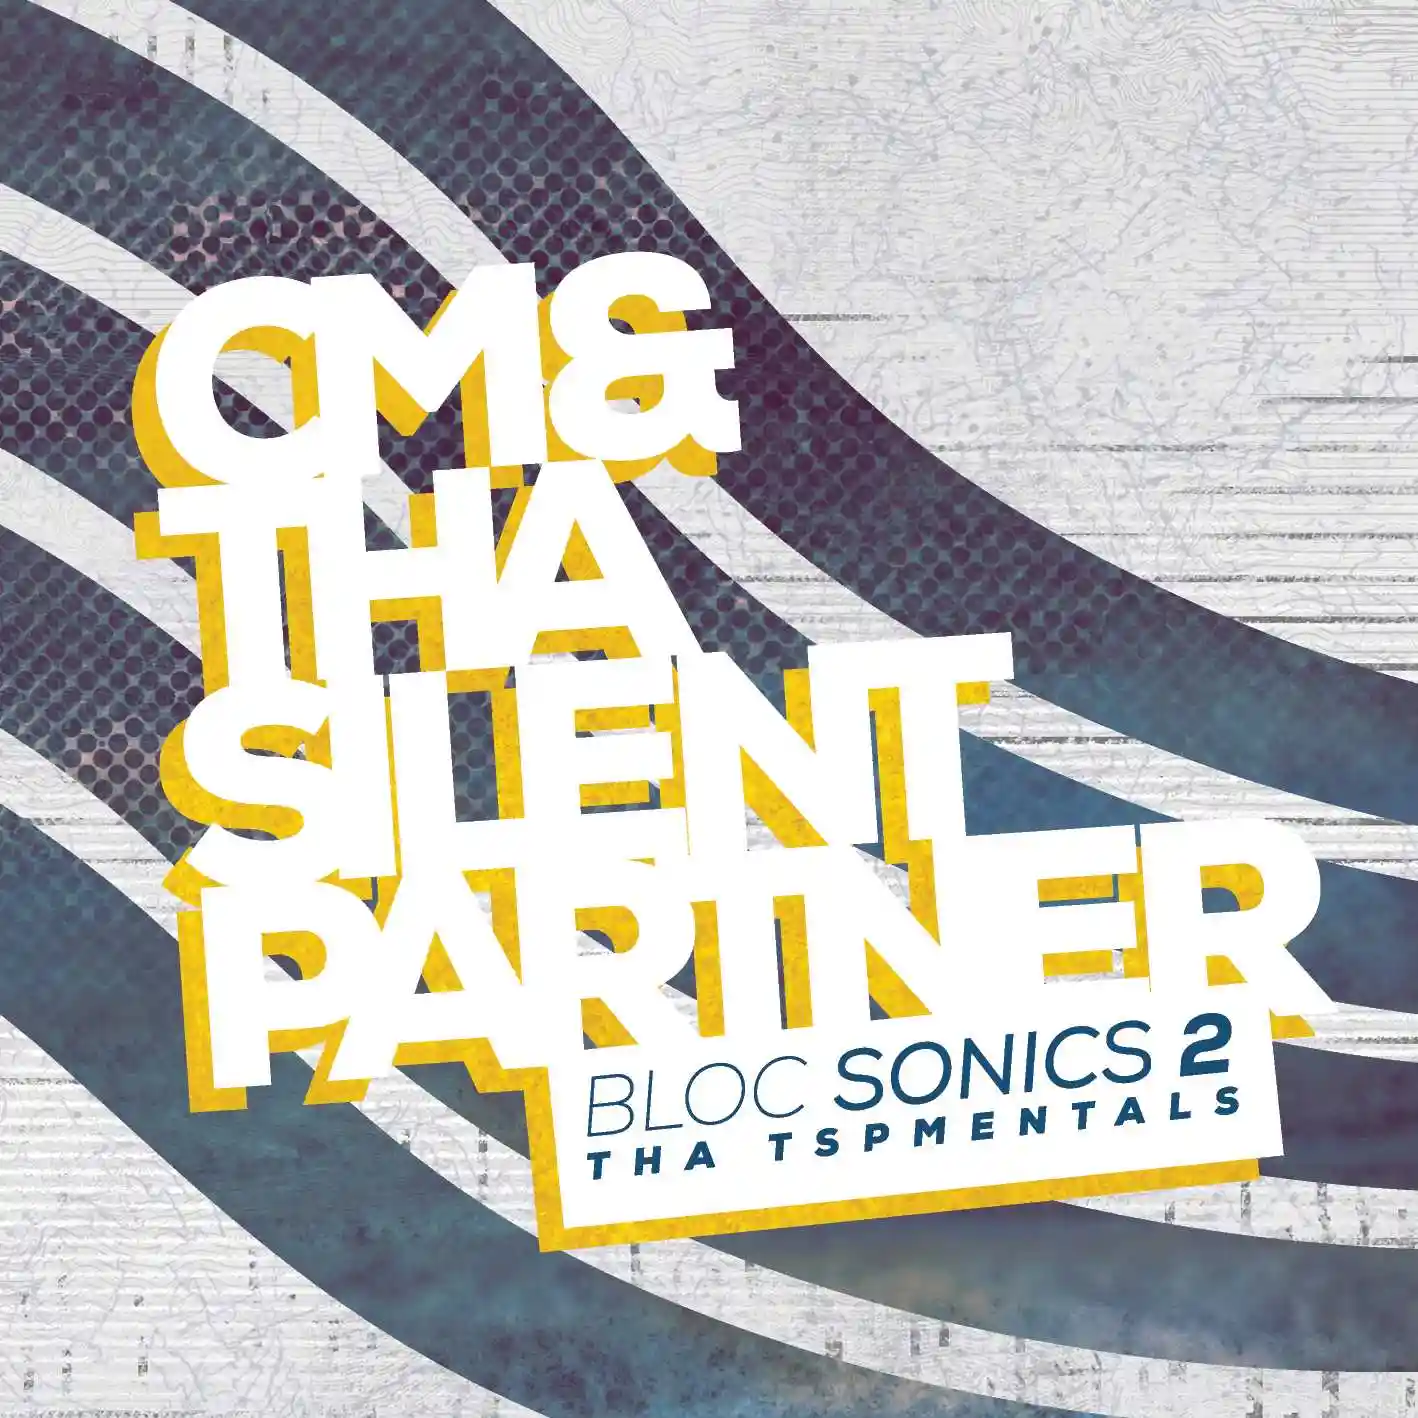 Album cover for “bloc Sonics 2 (Tha TSPMENTALS)” by CM &amp; Tha Silent Partner